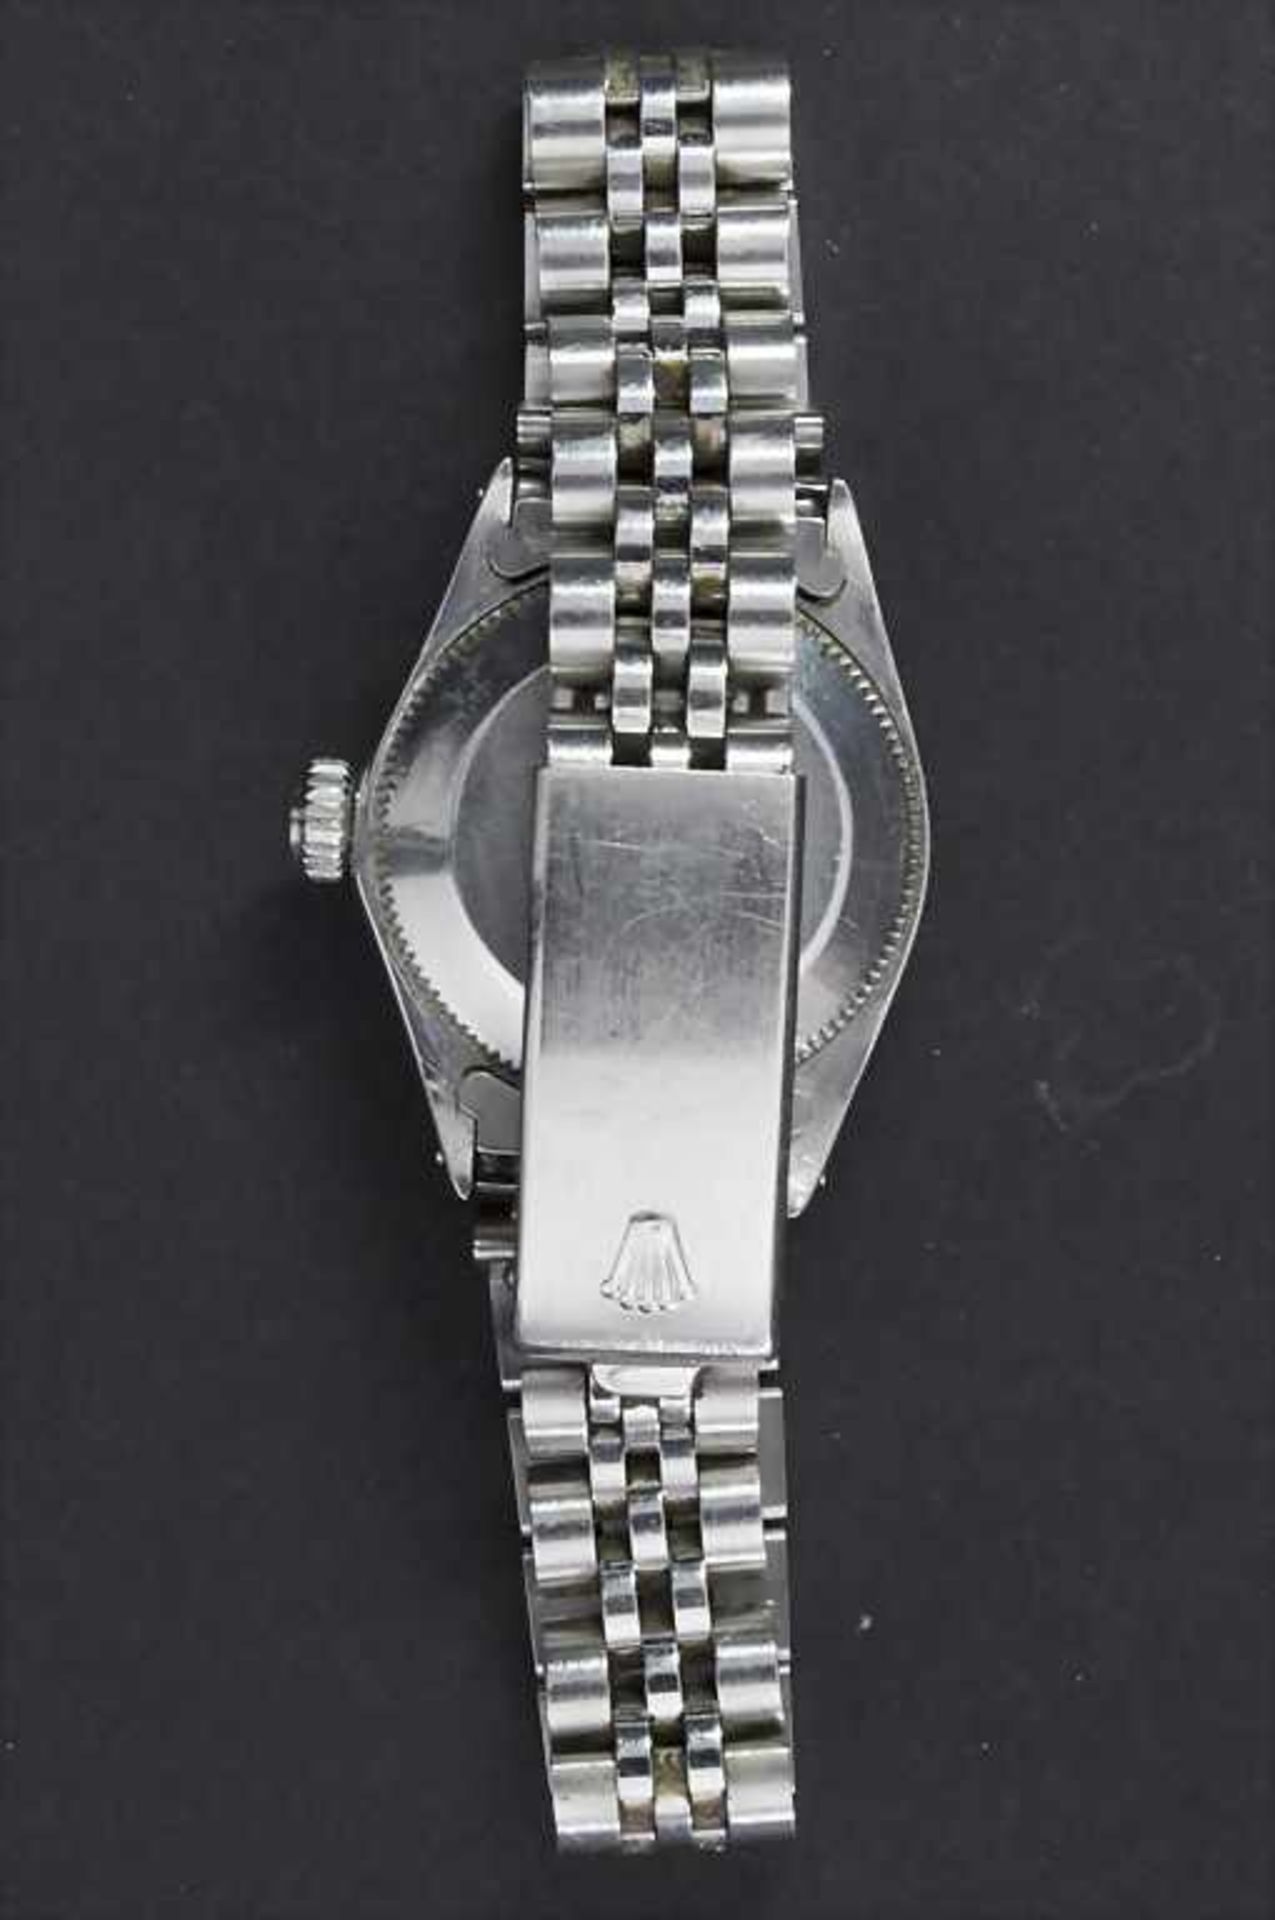 Damenarmbanduhr / A ladies wrist watch, Rolex Oyster Perpetual Date, Schweiz, um 1980 - Image 3 of 3